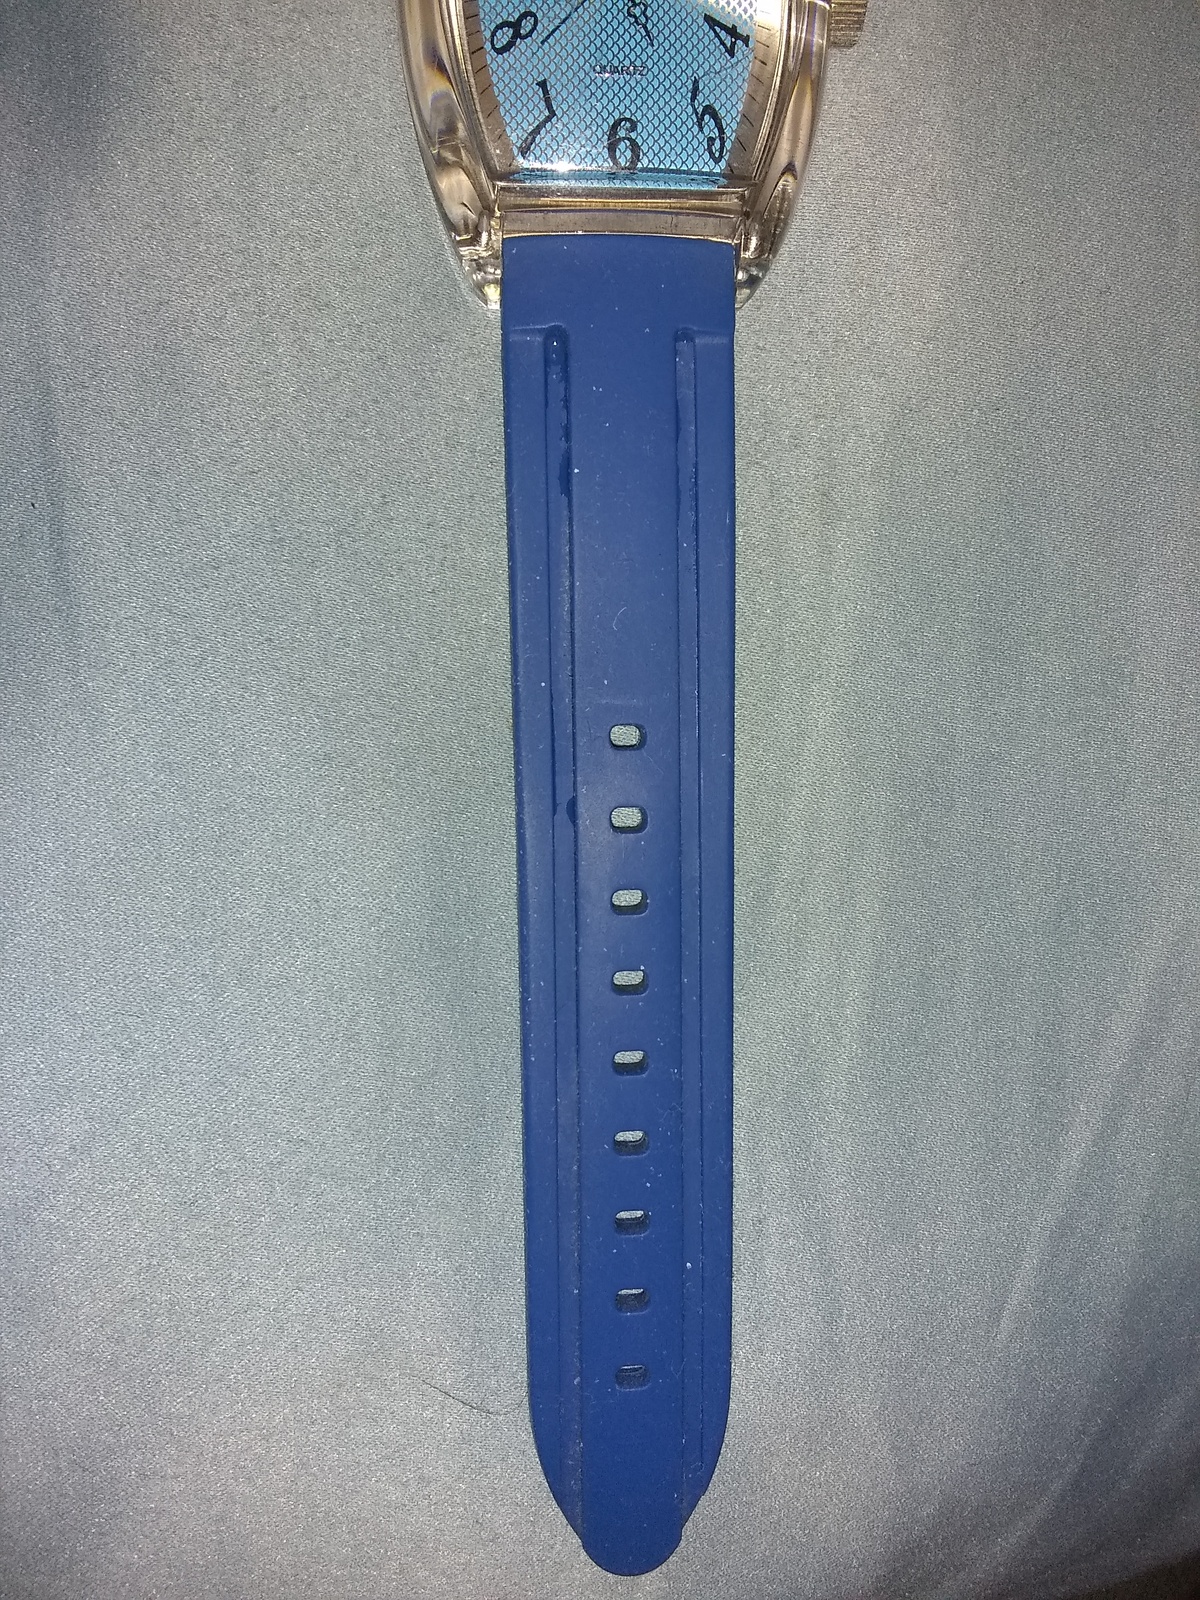 Tocs blue watch with blue rubber strap quartz needs battery - Wristwatches